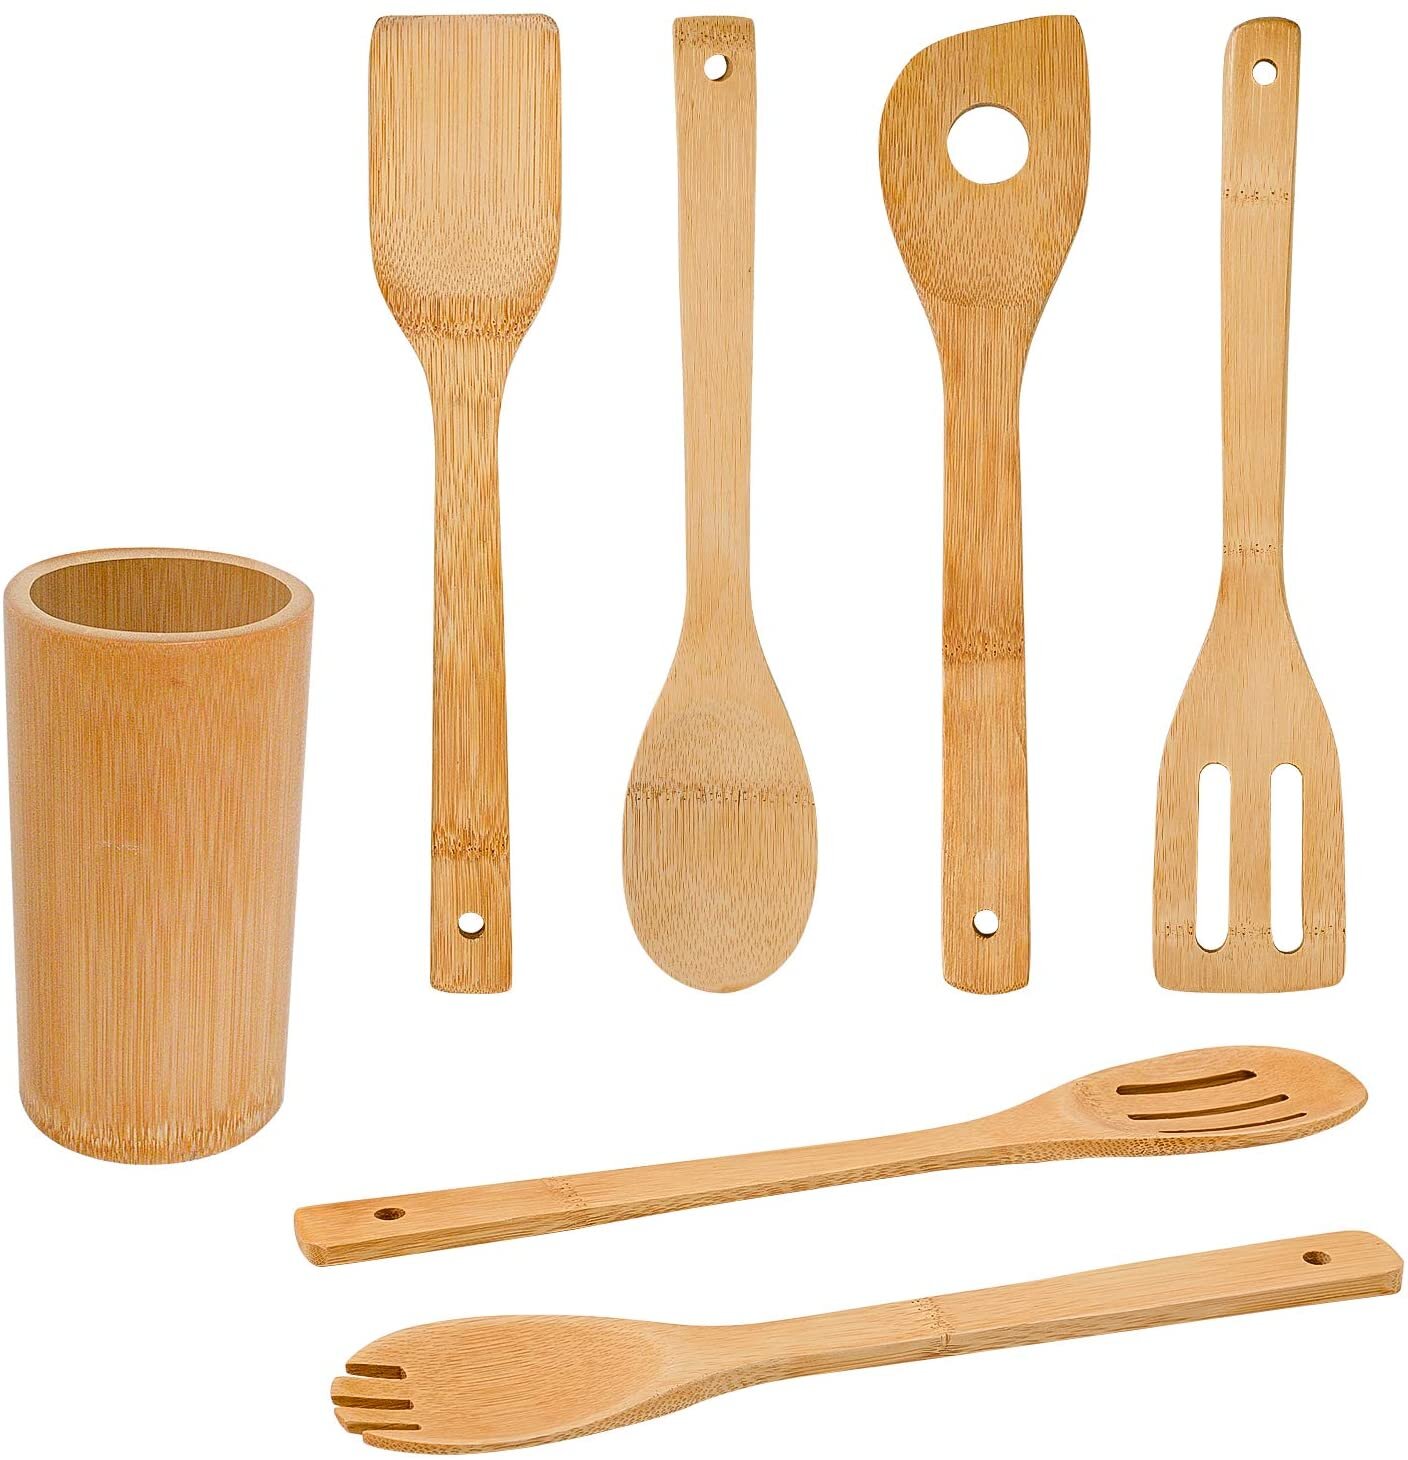 Anolon Teak Wood Cooking Tools 13-Inch Utensils Set, 3 Piece & Reviews